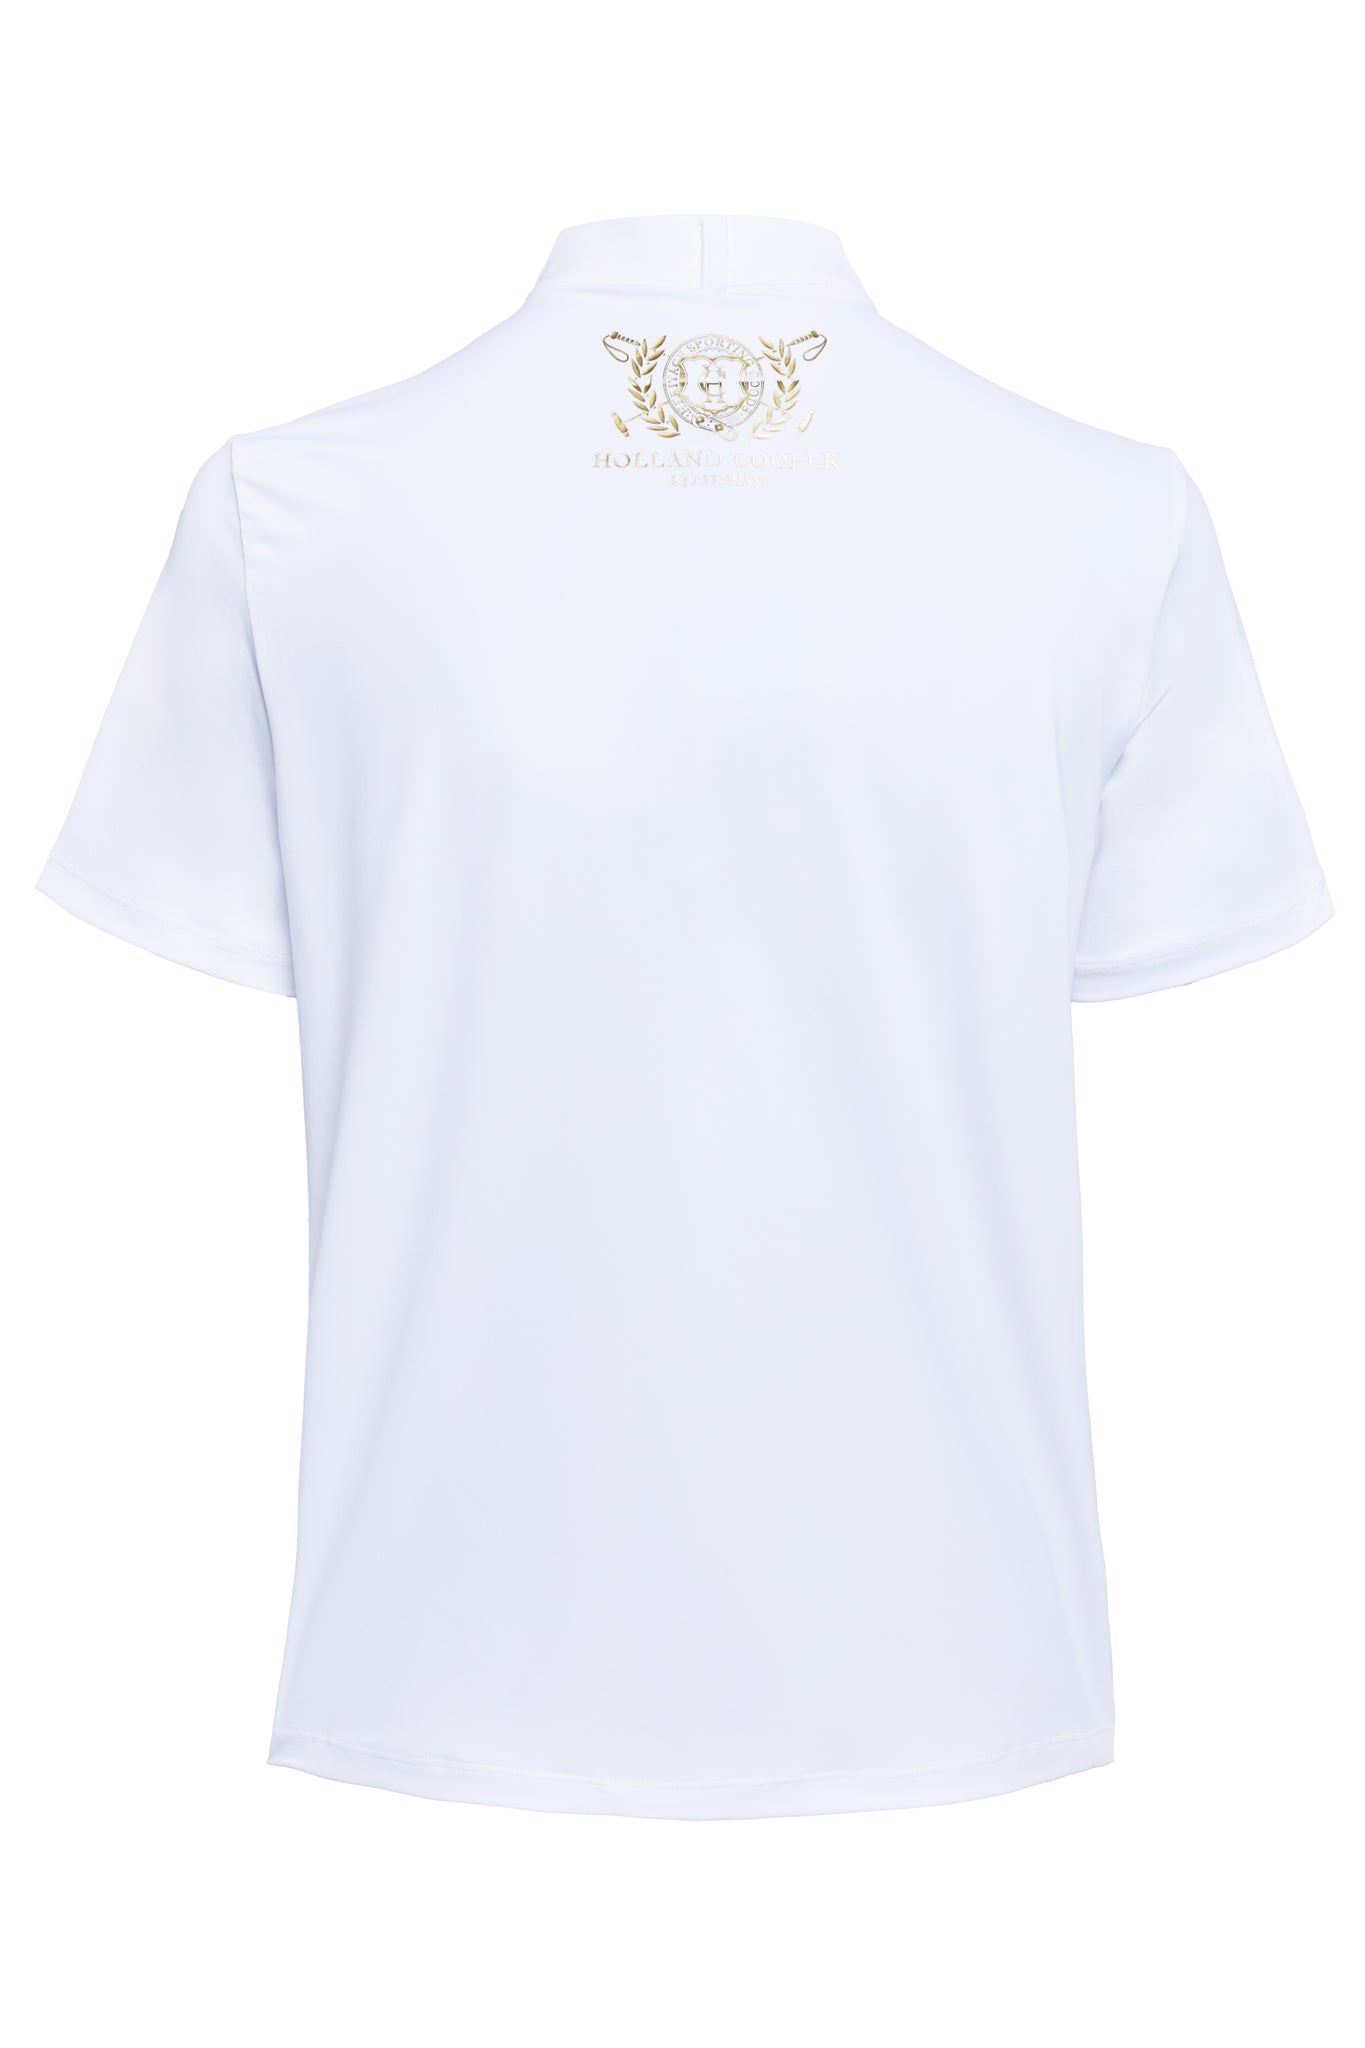 Windsor Show Shirt (White)